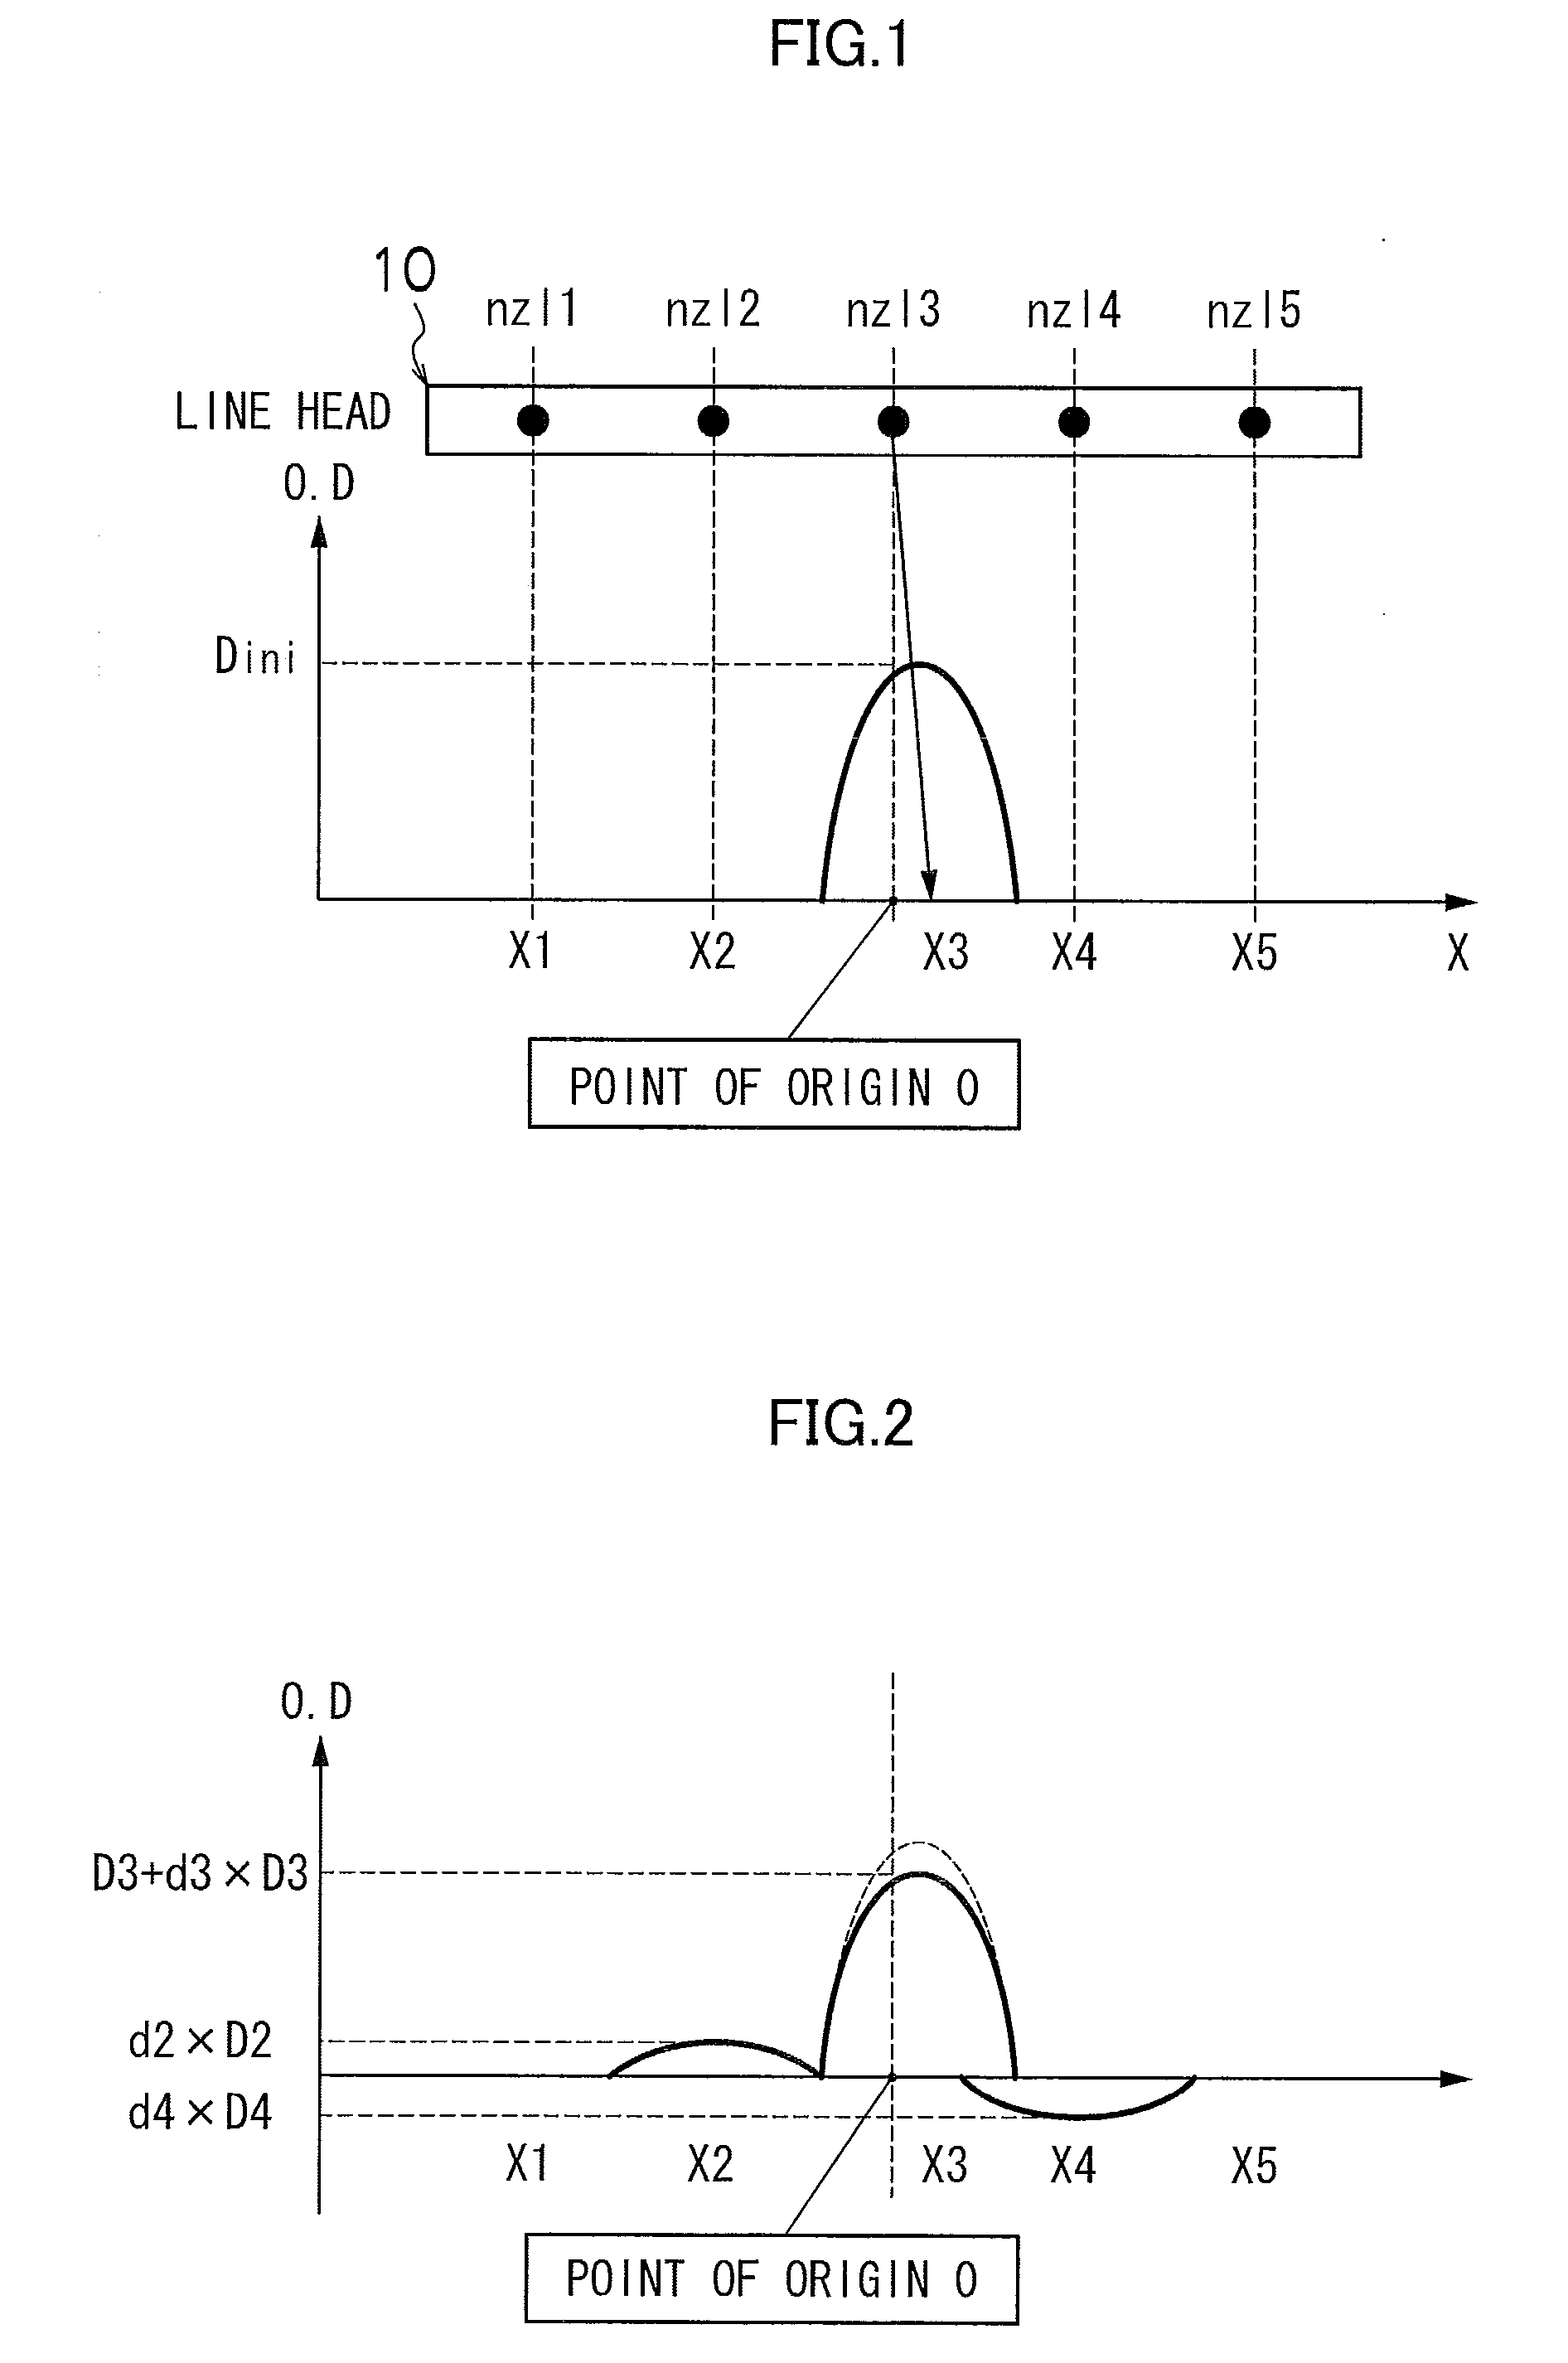 Image recording apparatus and method